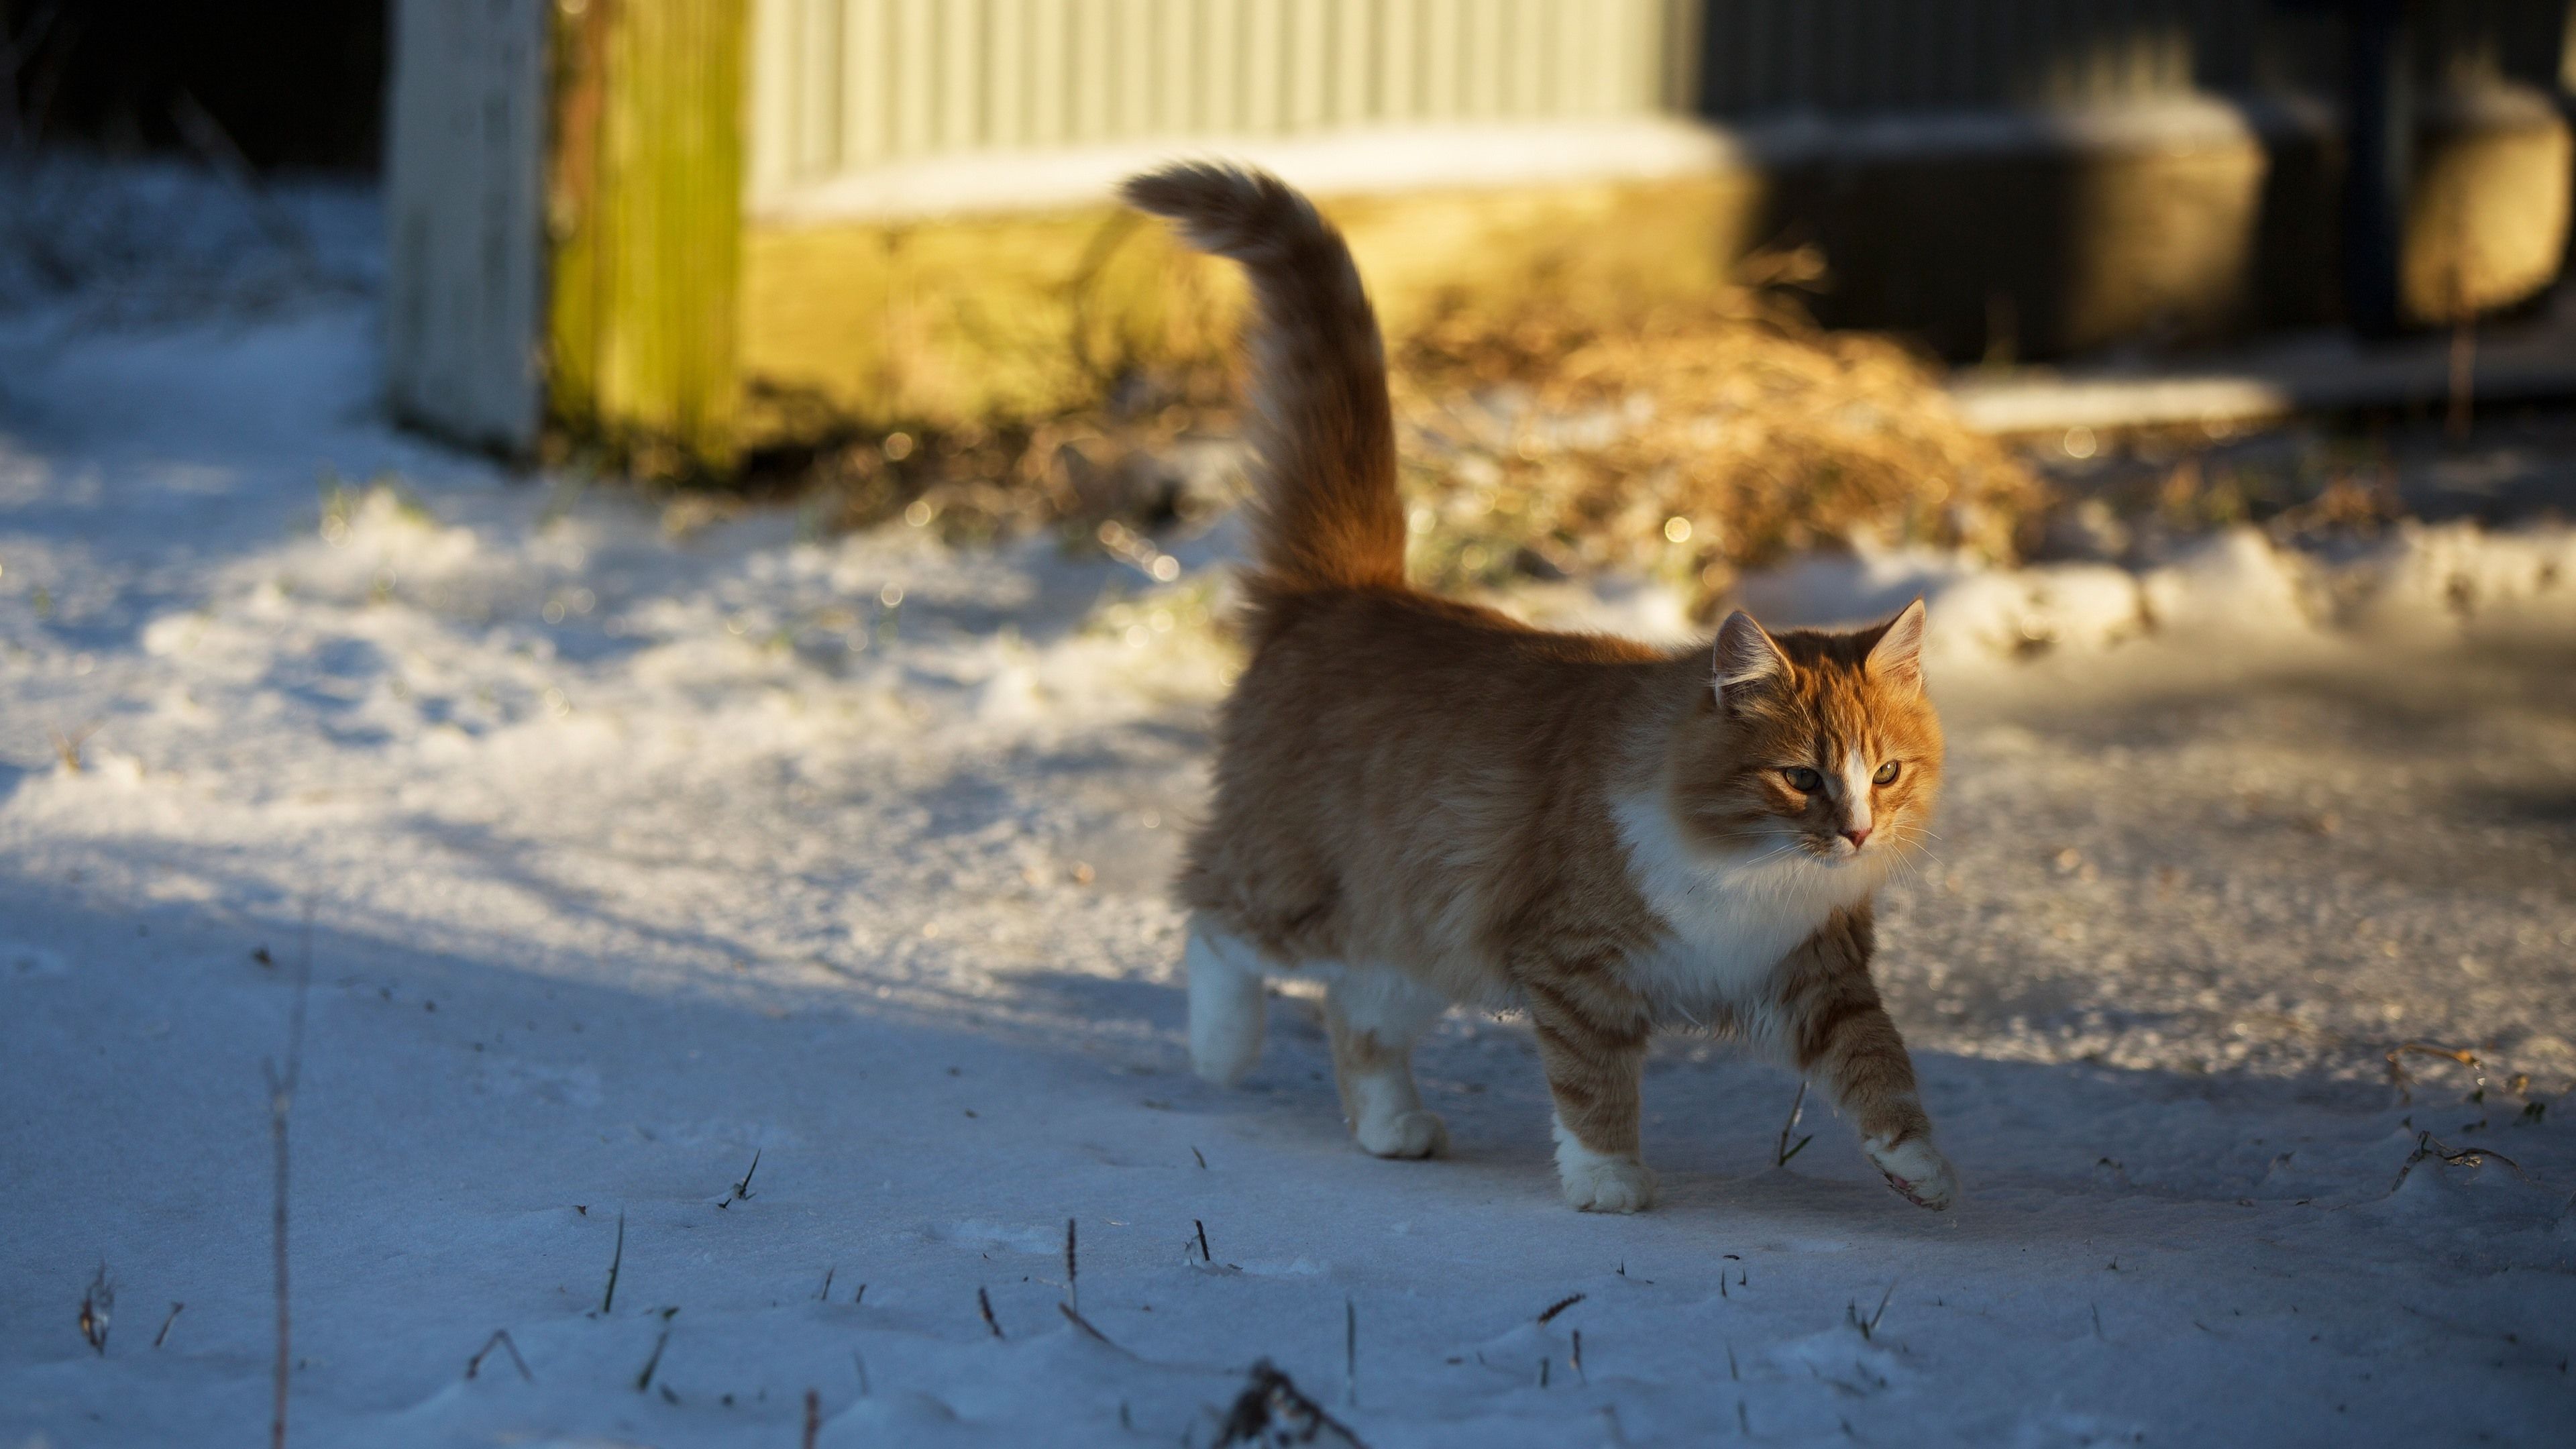 Wallpaper Cat walking in the snow, winter 3840x2160 UHD 4K Picture